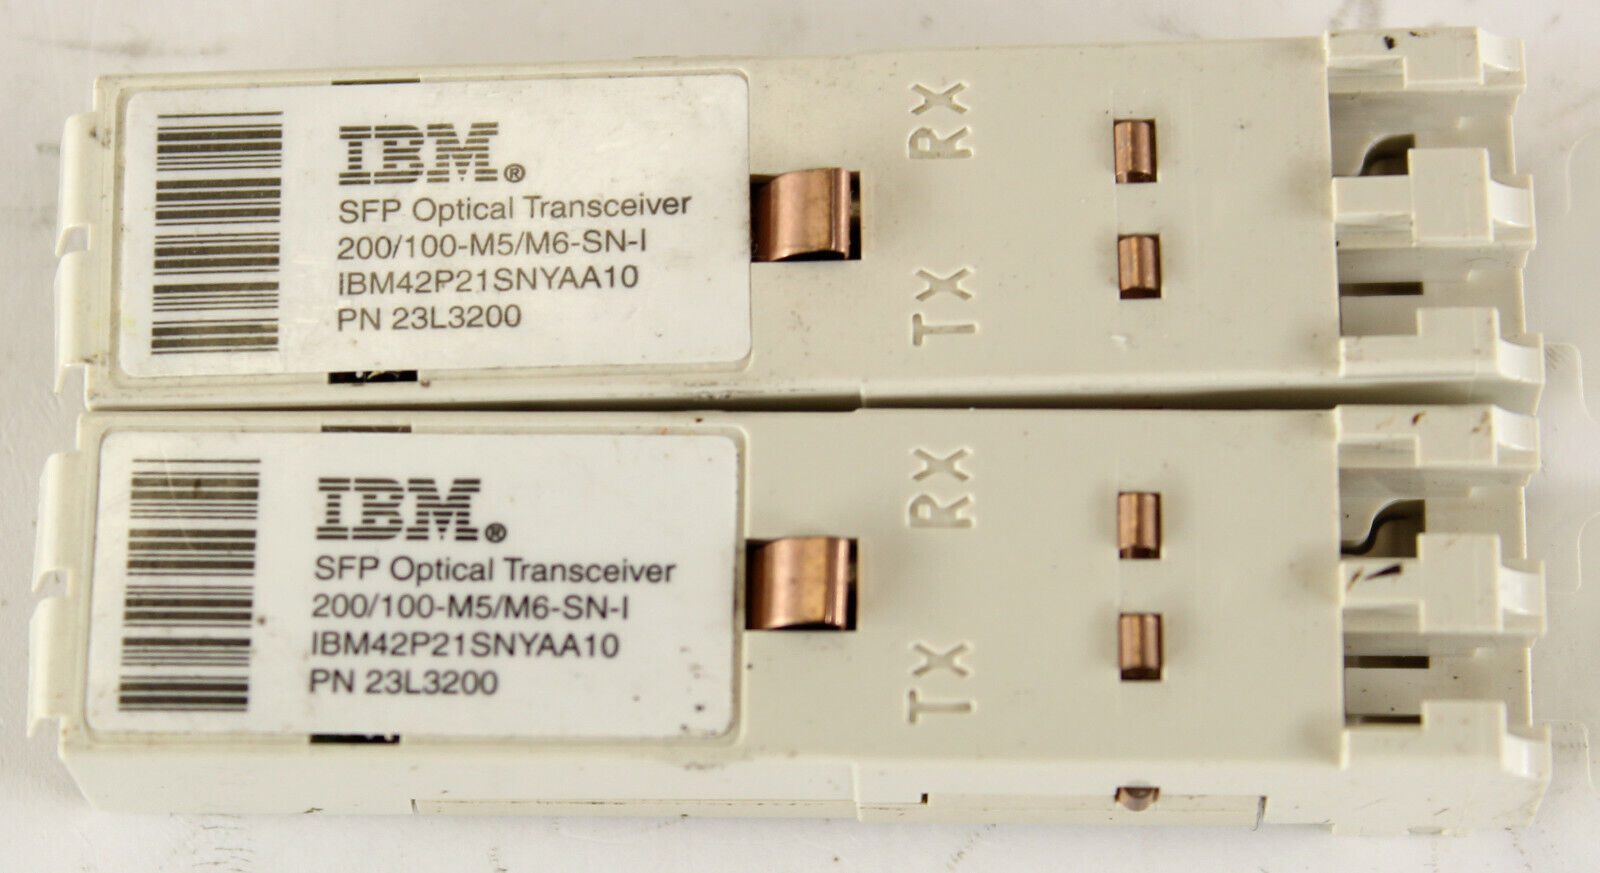 Lot of 2 IBM IBM42P21SNYAA10 23L3200 2Gb SW SFP Transceiver Module